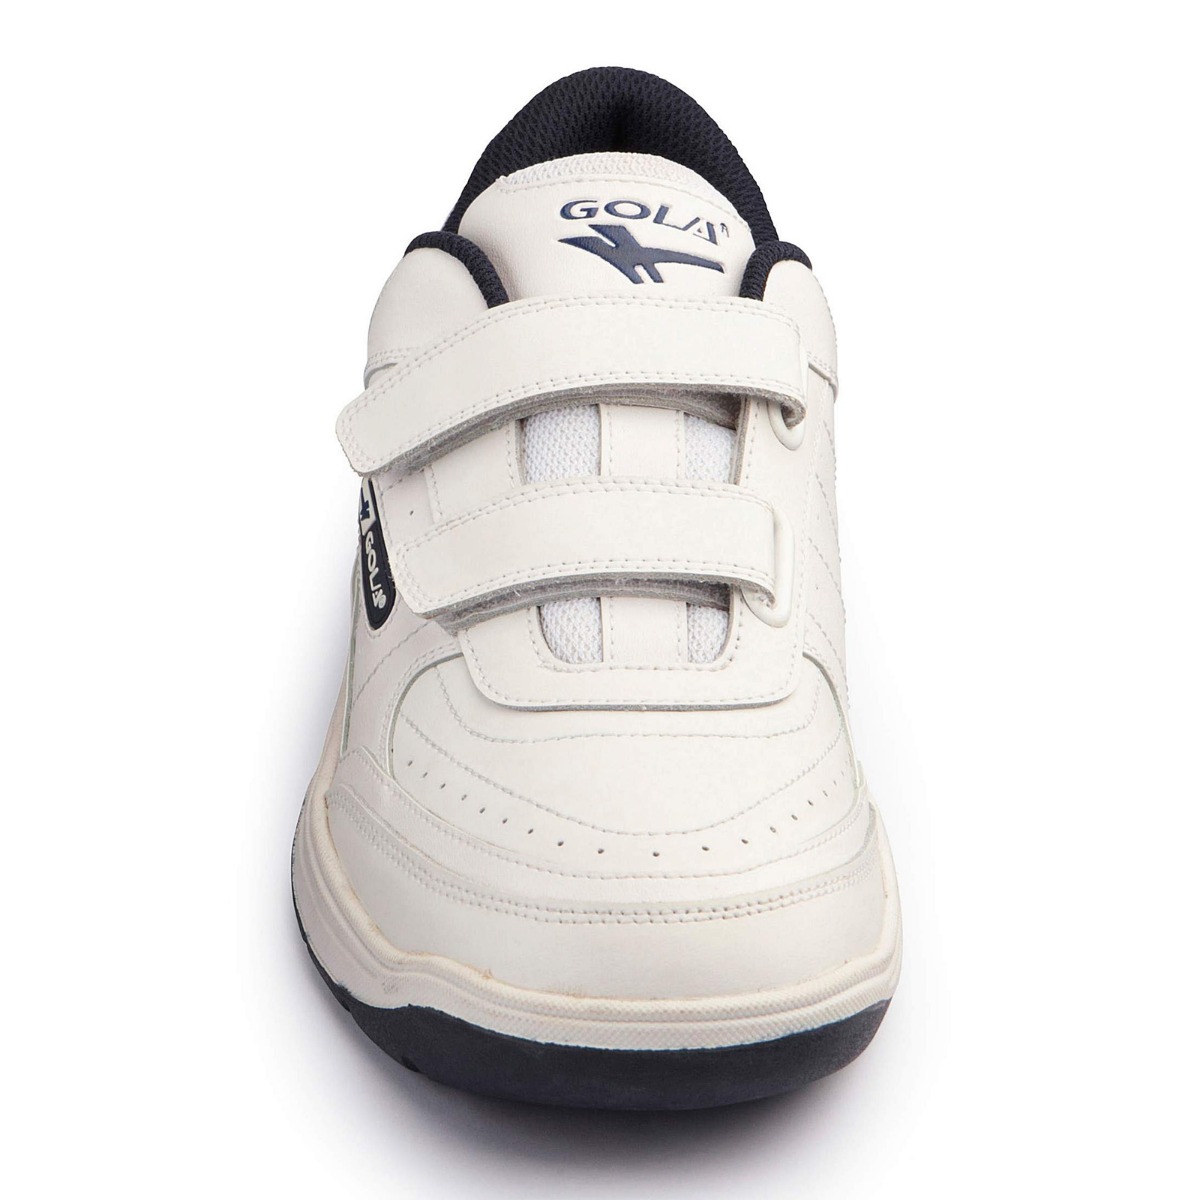 GOLA Mens White Walking Running Trainers Fitness Gym Sports Shoes UK Size 14 15 | eBay